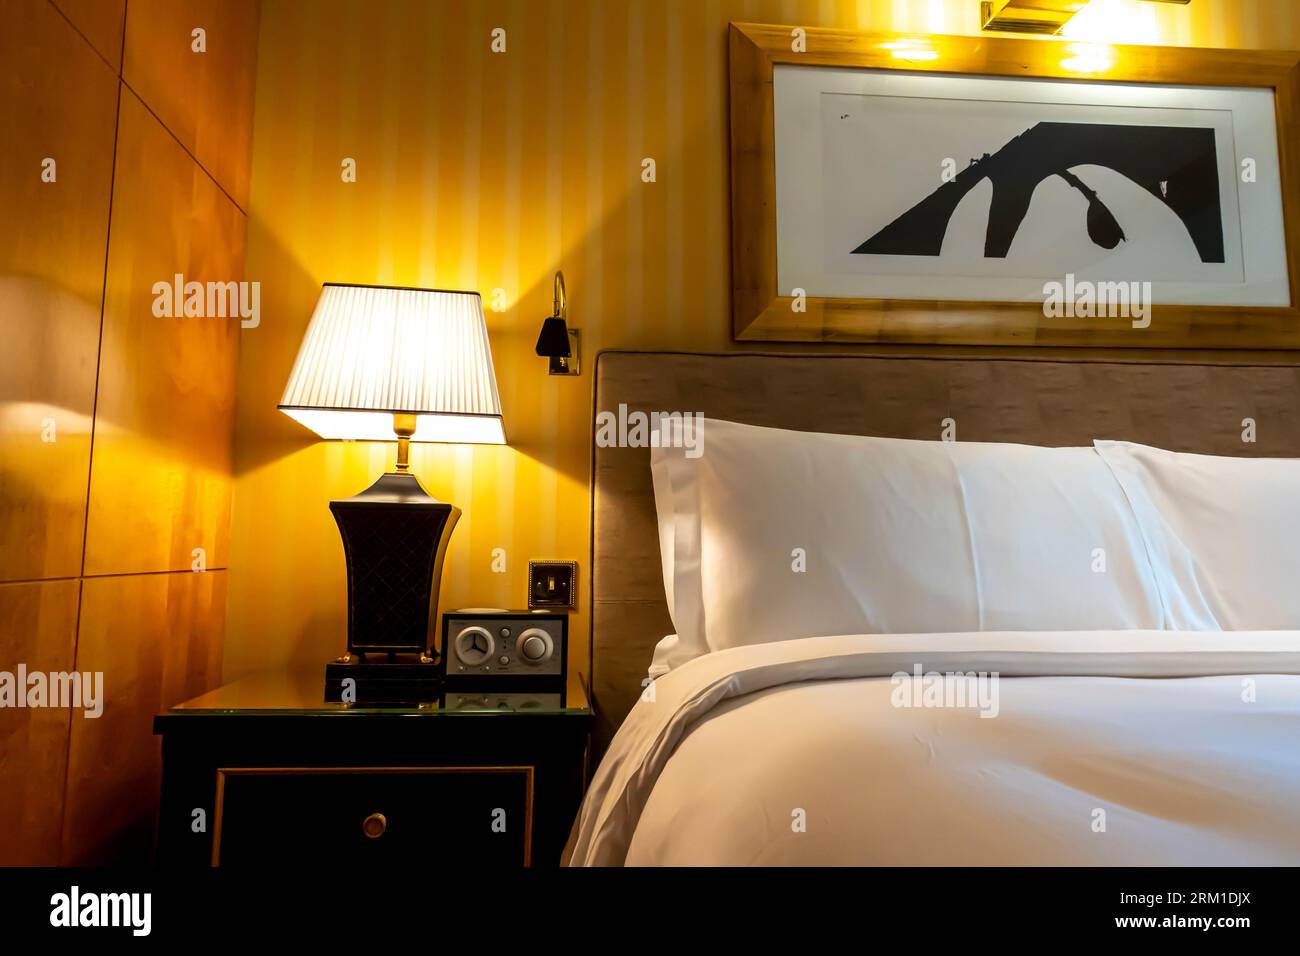 Deluxe guest room in Ritz-Carlton hotel Bahrain Stock Photo